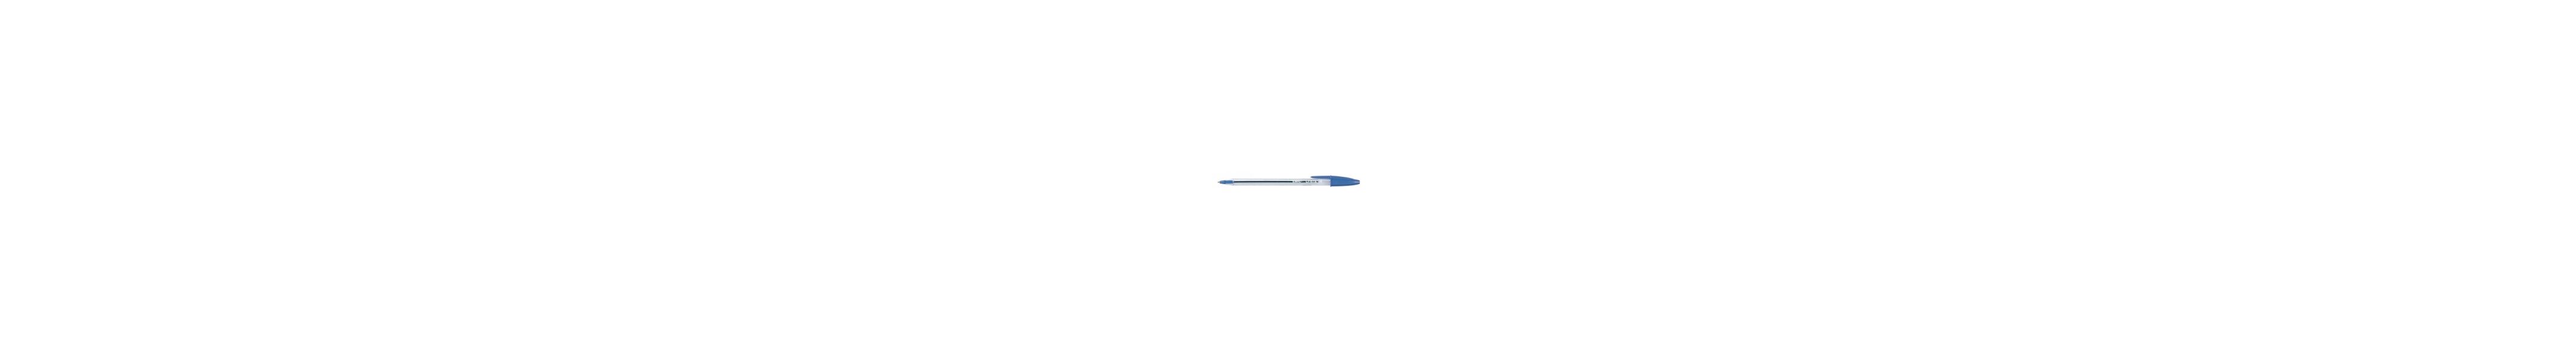 Ballpoint Pen Bic Blue